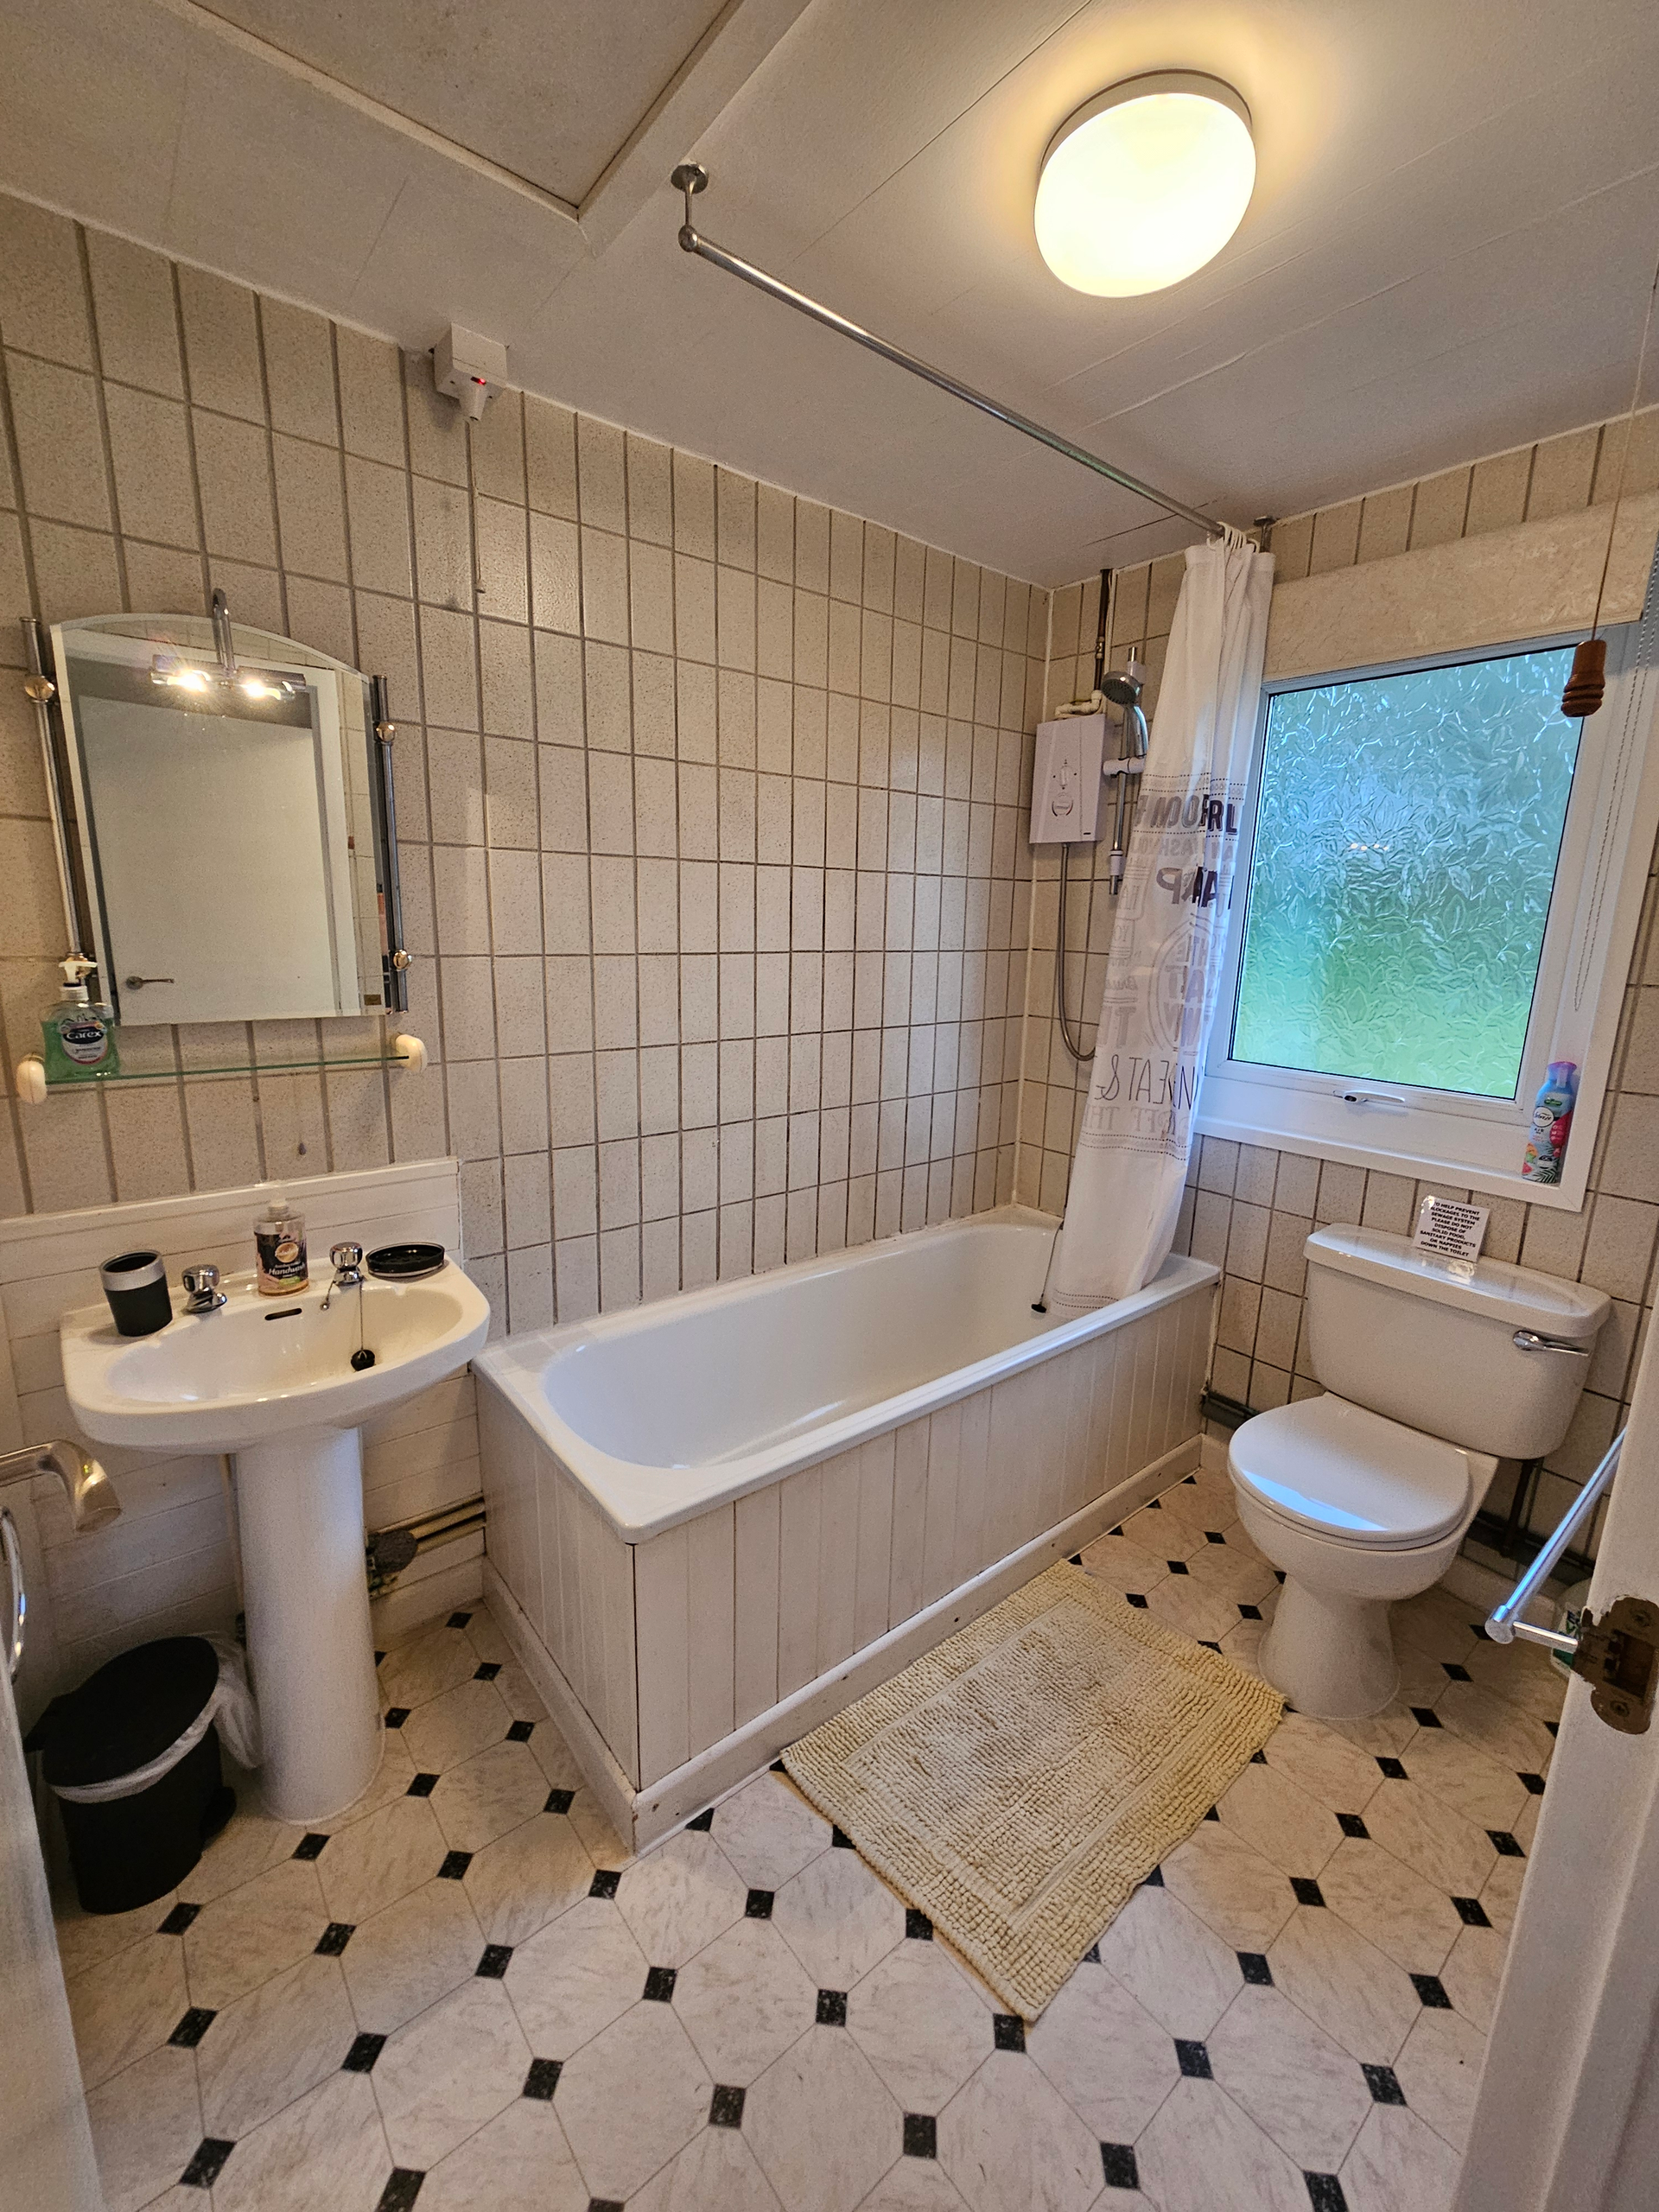 The full bathroom, has a toilet, bath/shower, sink and mirror